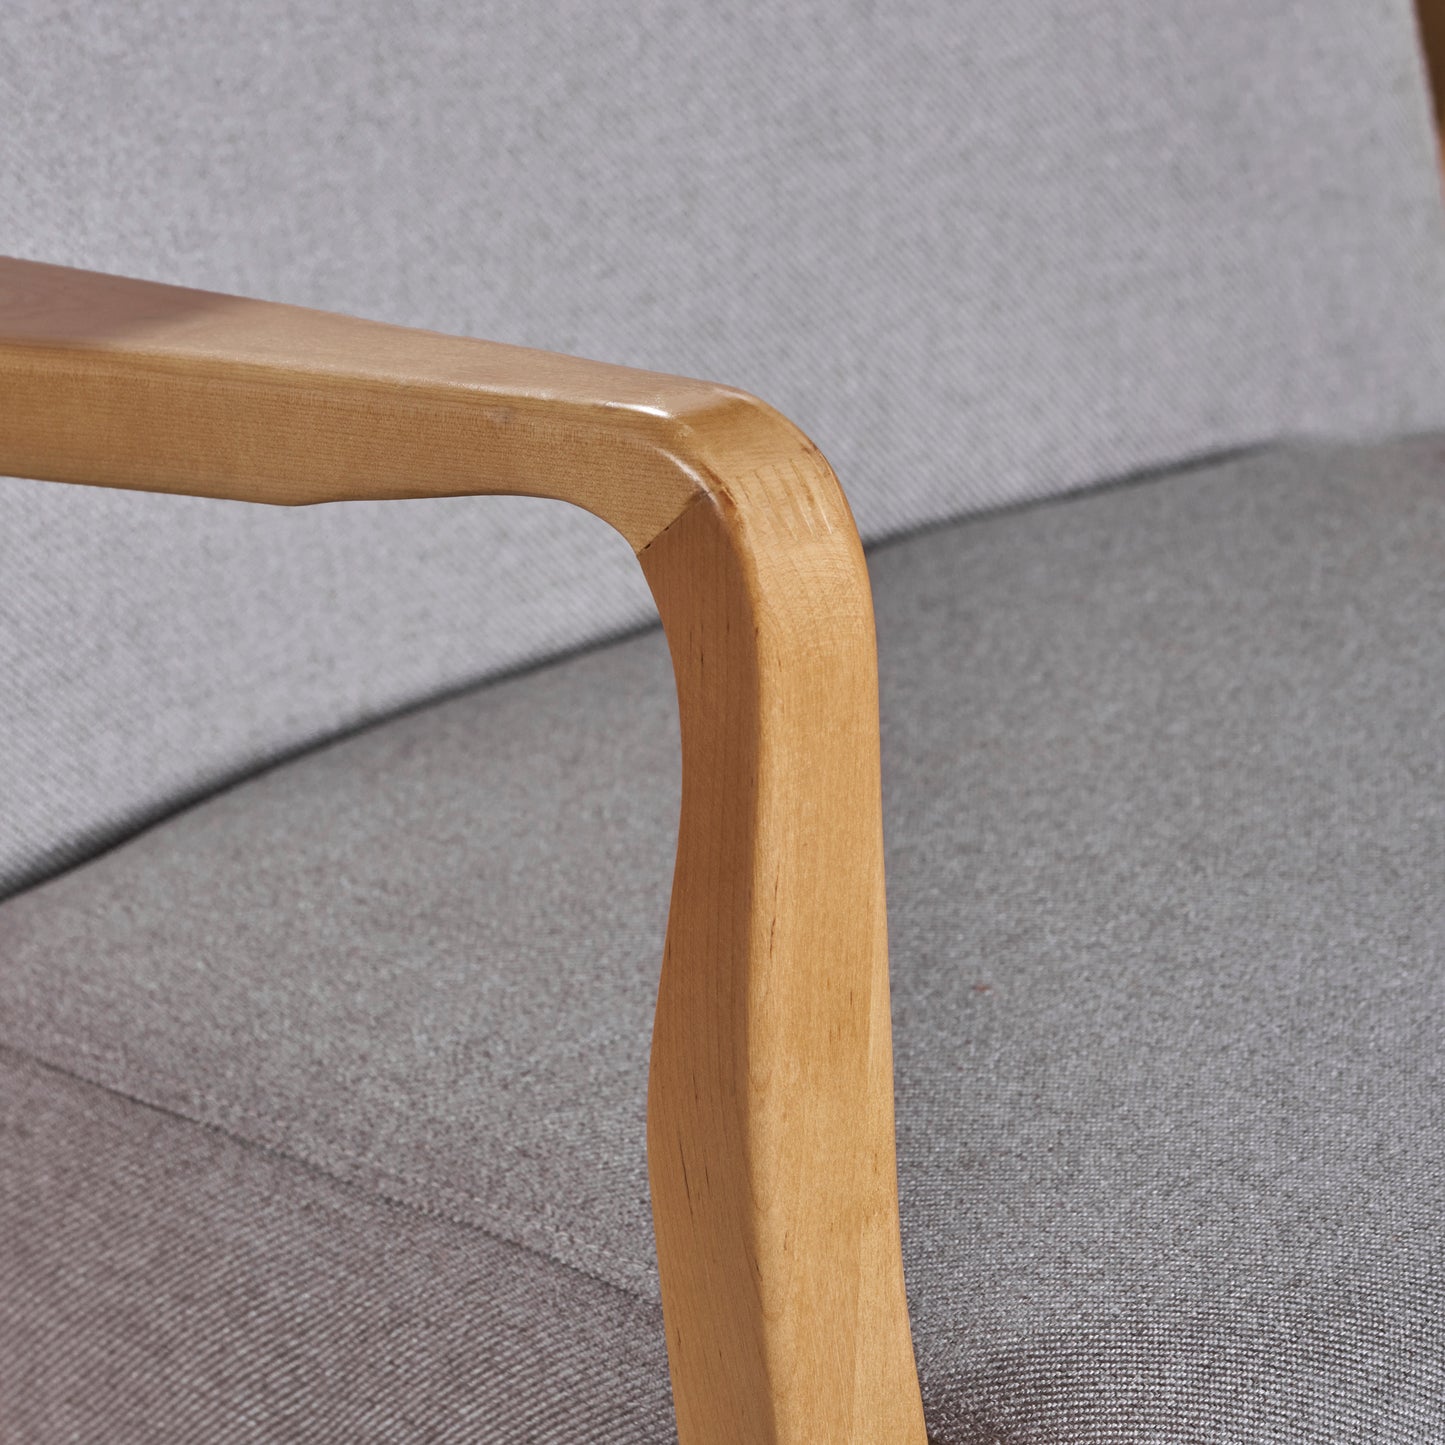 Winford Mid-Century Modern Wood Frame Fabric Armchair